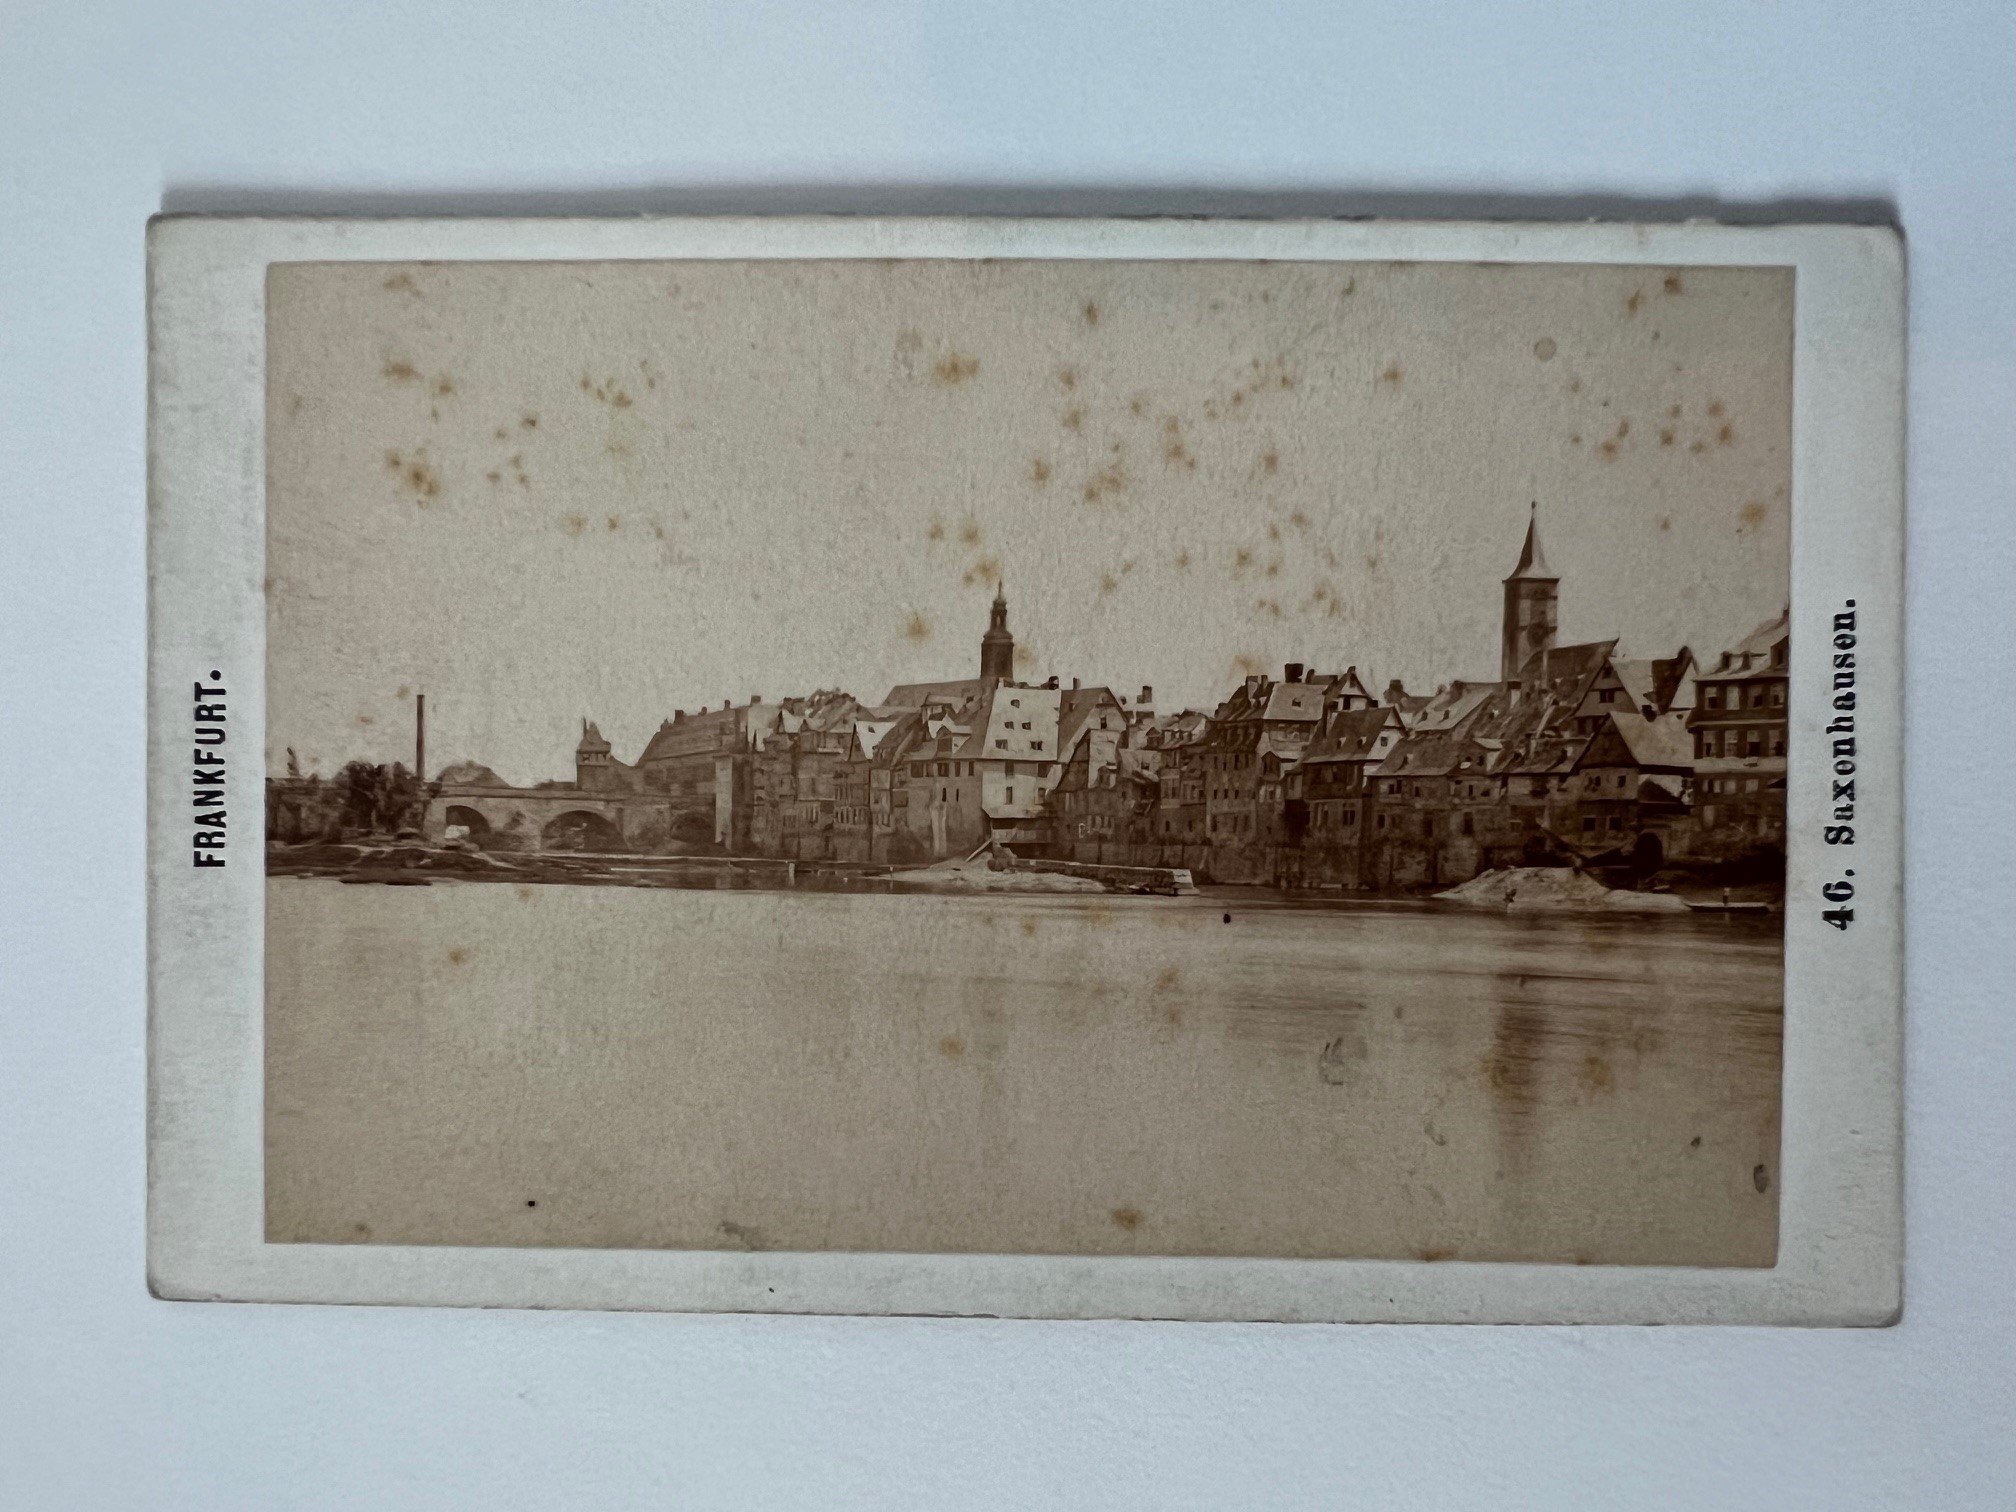 CdV, Frantisek Fridrich, Frankfurt, Nr. 46, Sachsenhausen, ca. 1875. (Taunus-Rhein-Main - Regionalgeschichtliche Sammlung Dr. Stefan Naas CC BY-NC-SA)